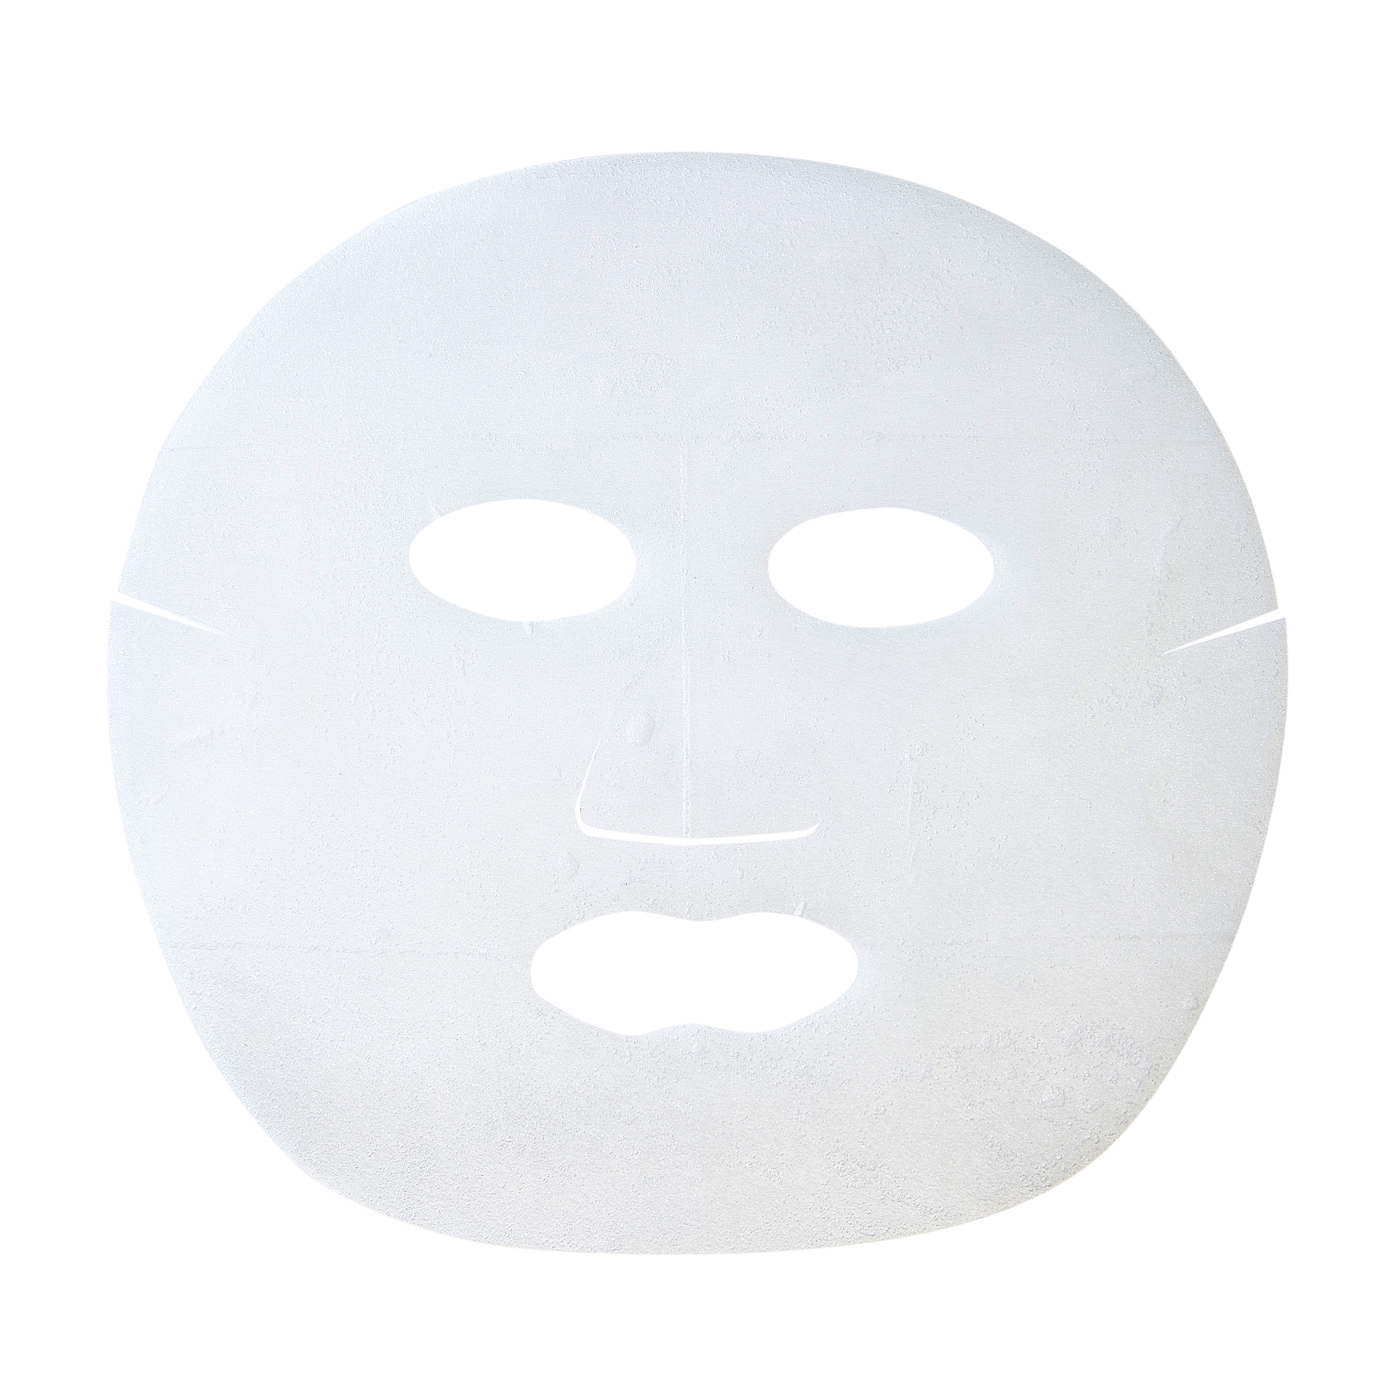 SALE／88%OFF】 透明白肌 ホワイトマスクNと毛穴撫子お米のマスク